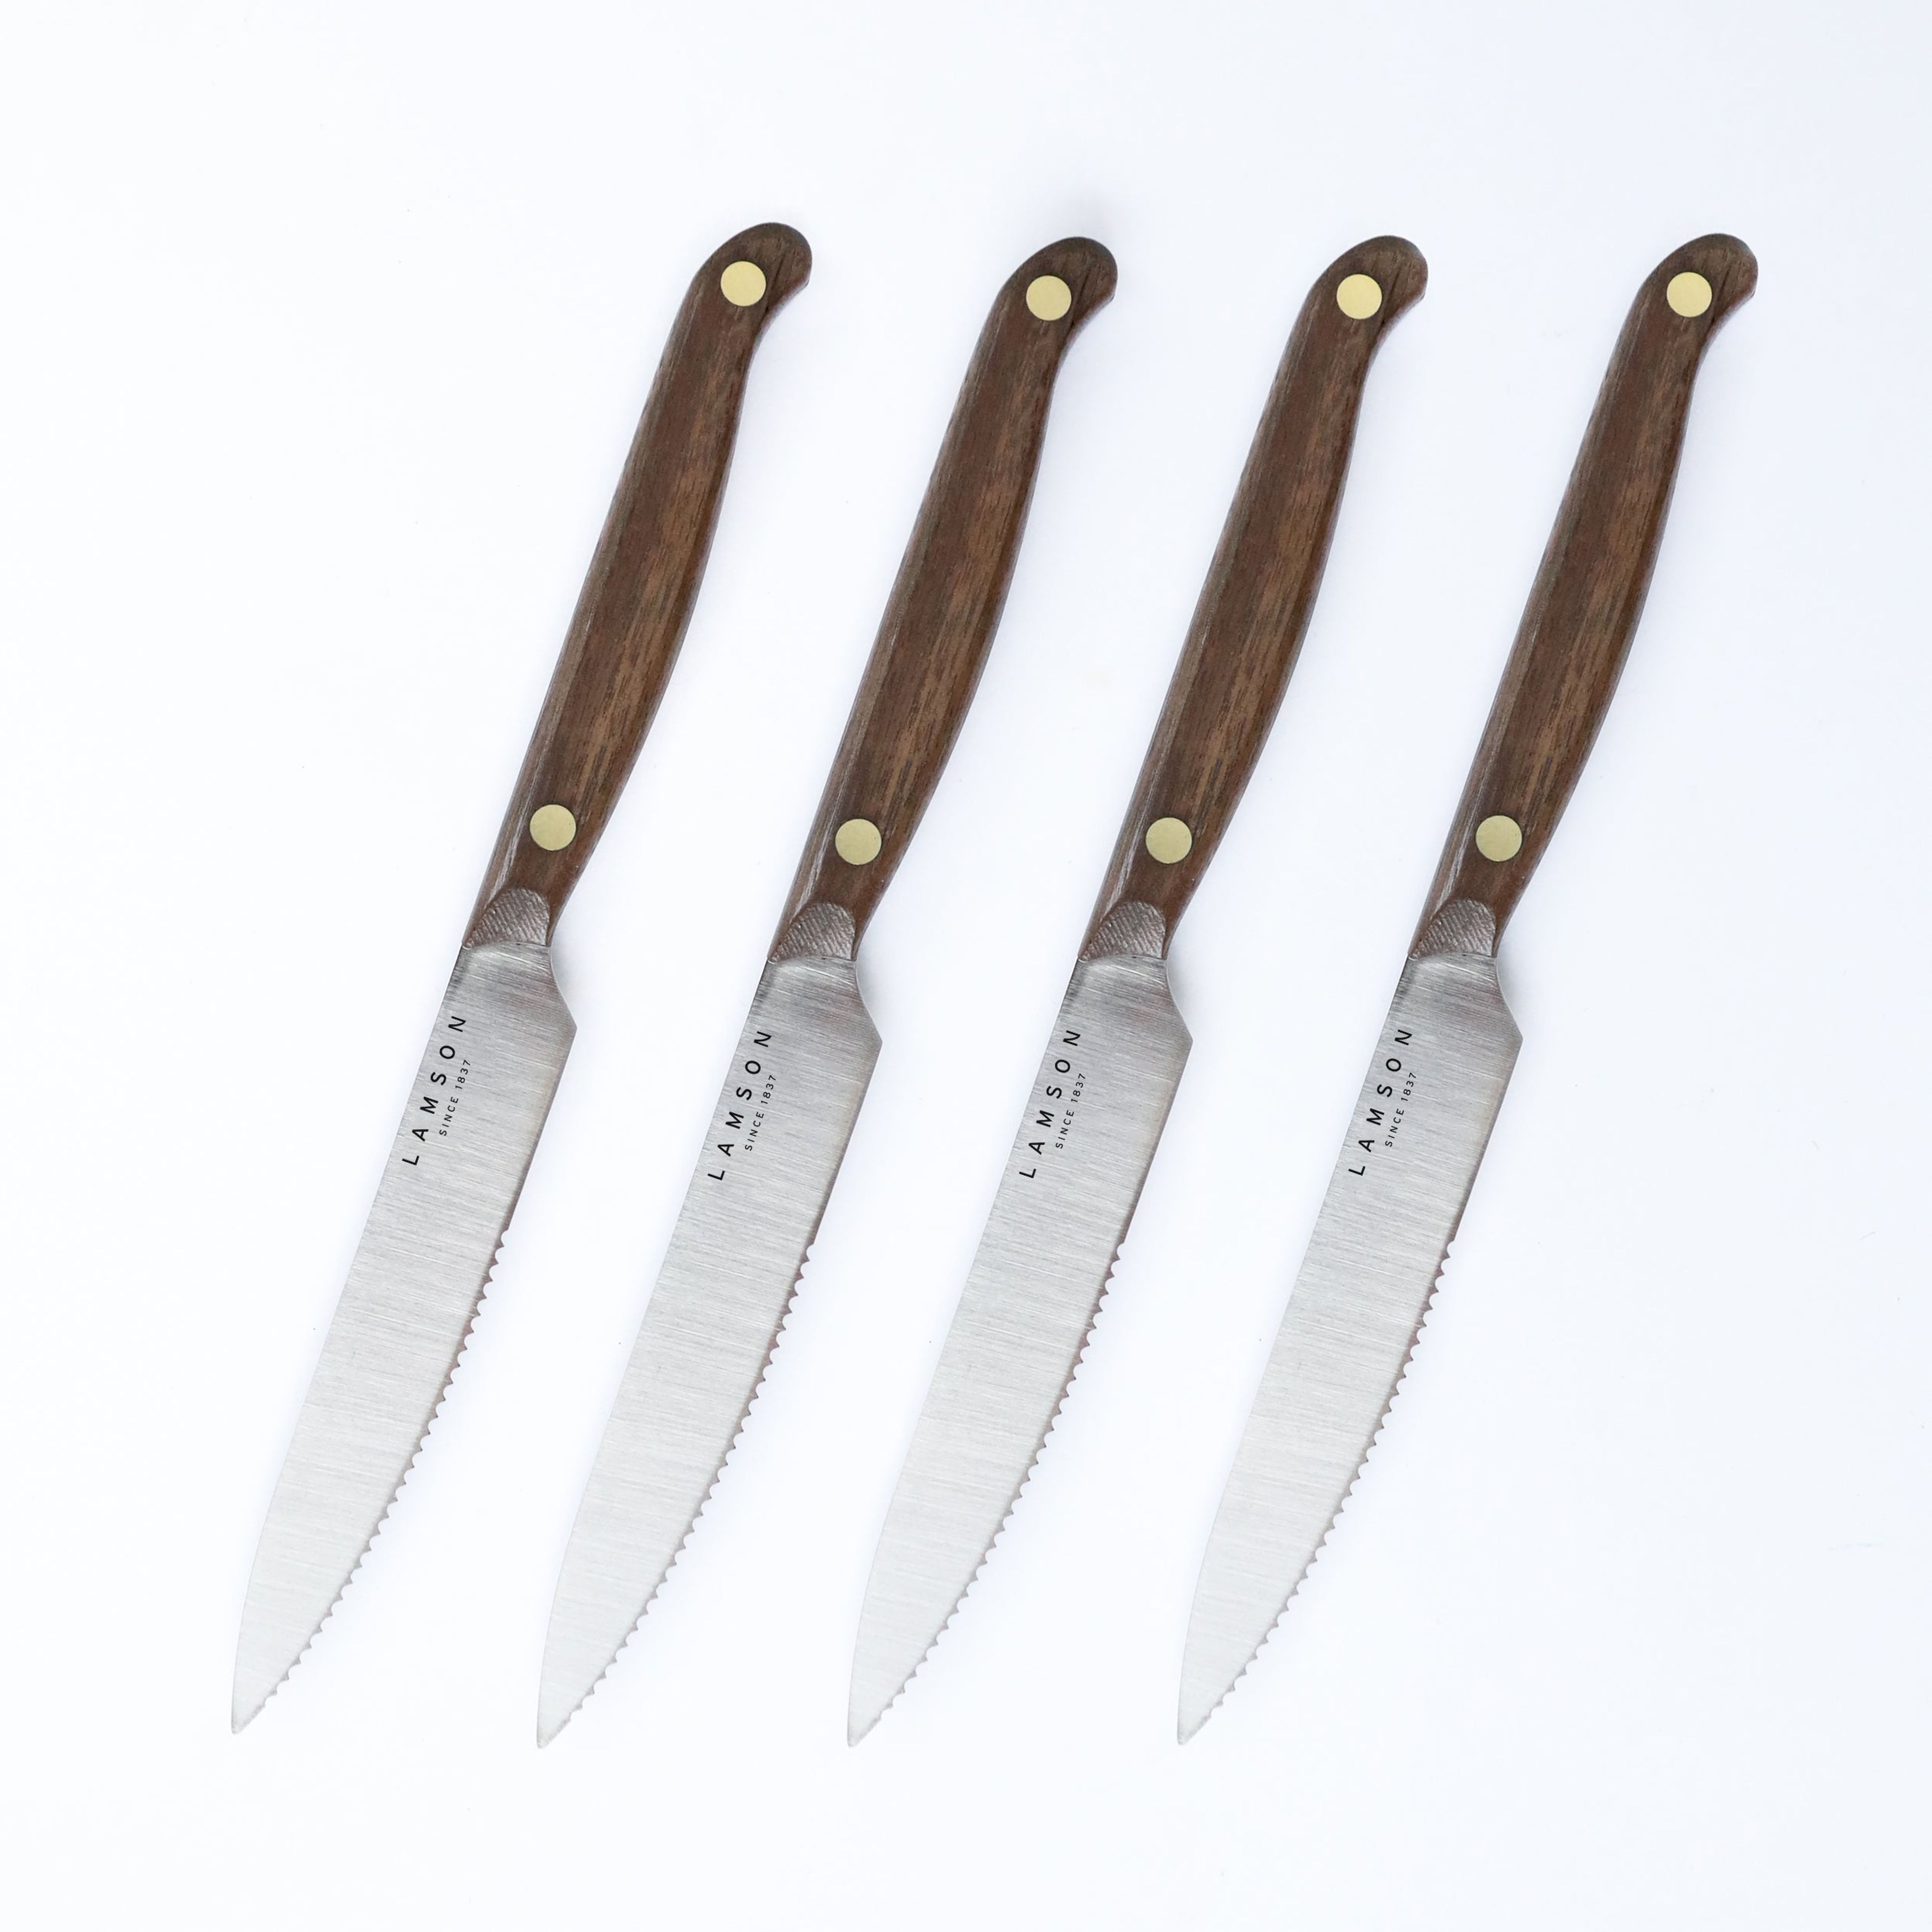 5" Vintage Steak Knives, 4-Piece Sets, Fine-Edge or Serrated